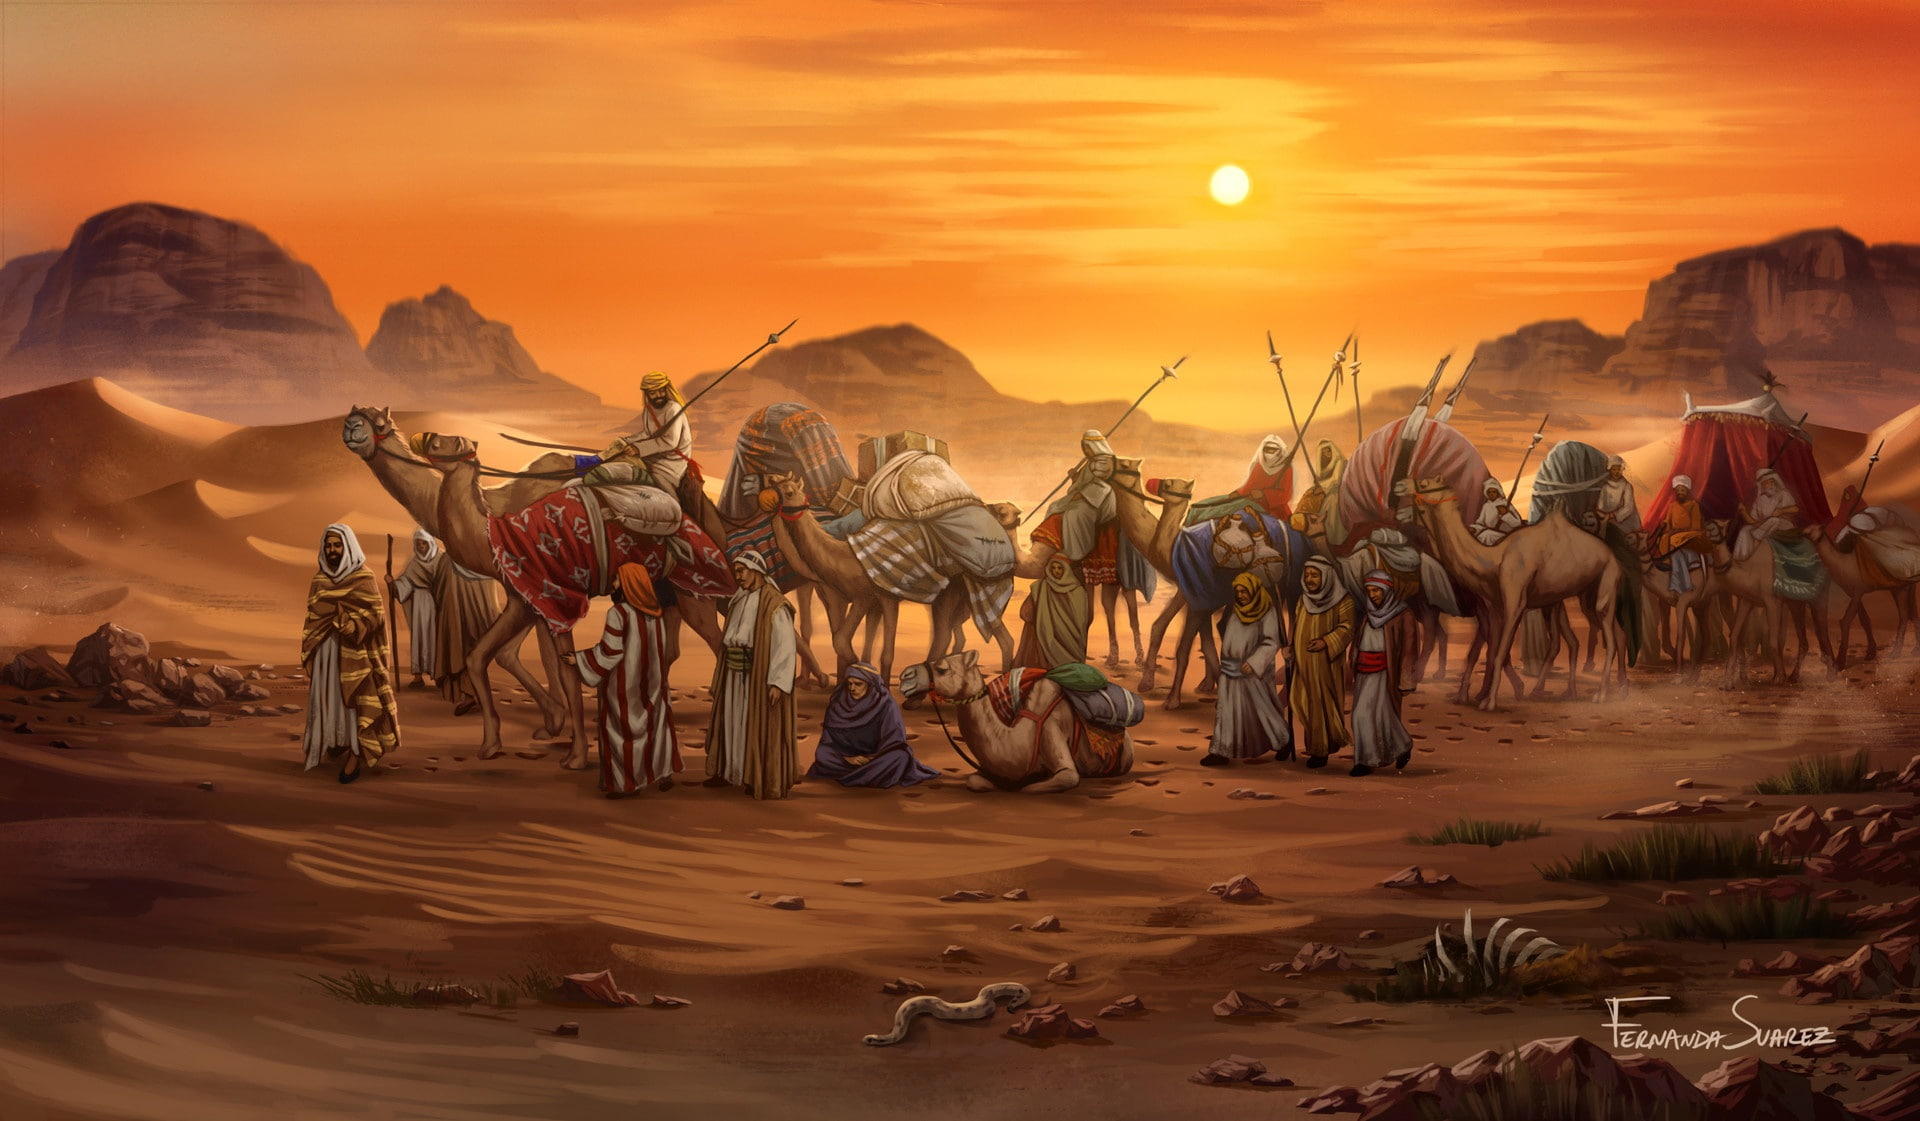 Sunset, Figure, The game, Caravan, Egypt, Art, Illustration